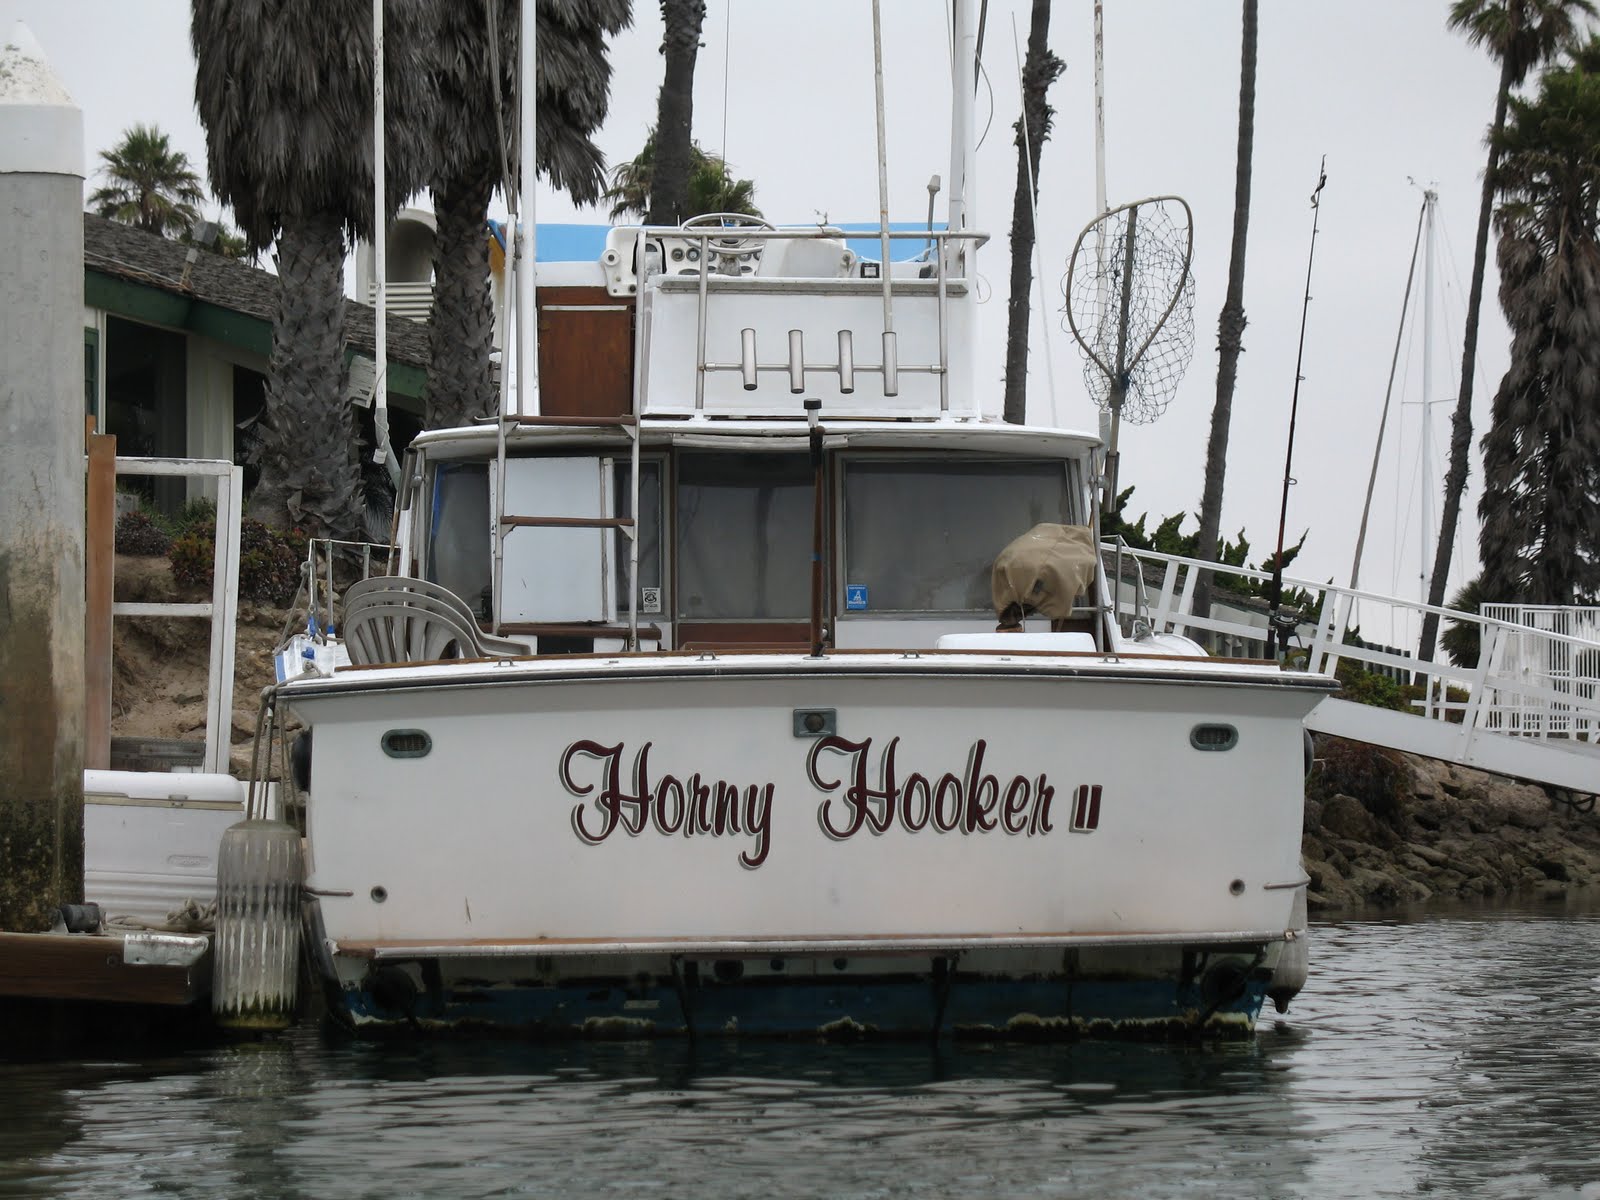 funny boat names - Horny Hooker u